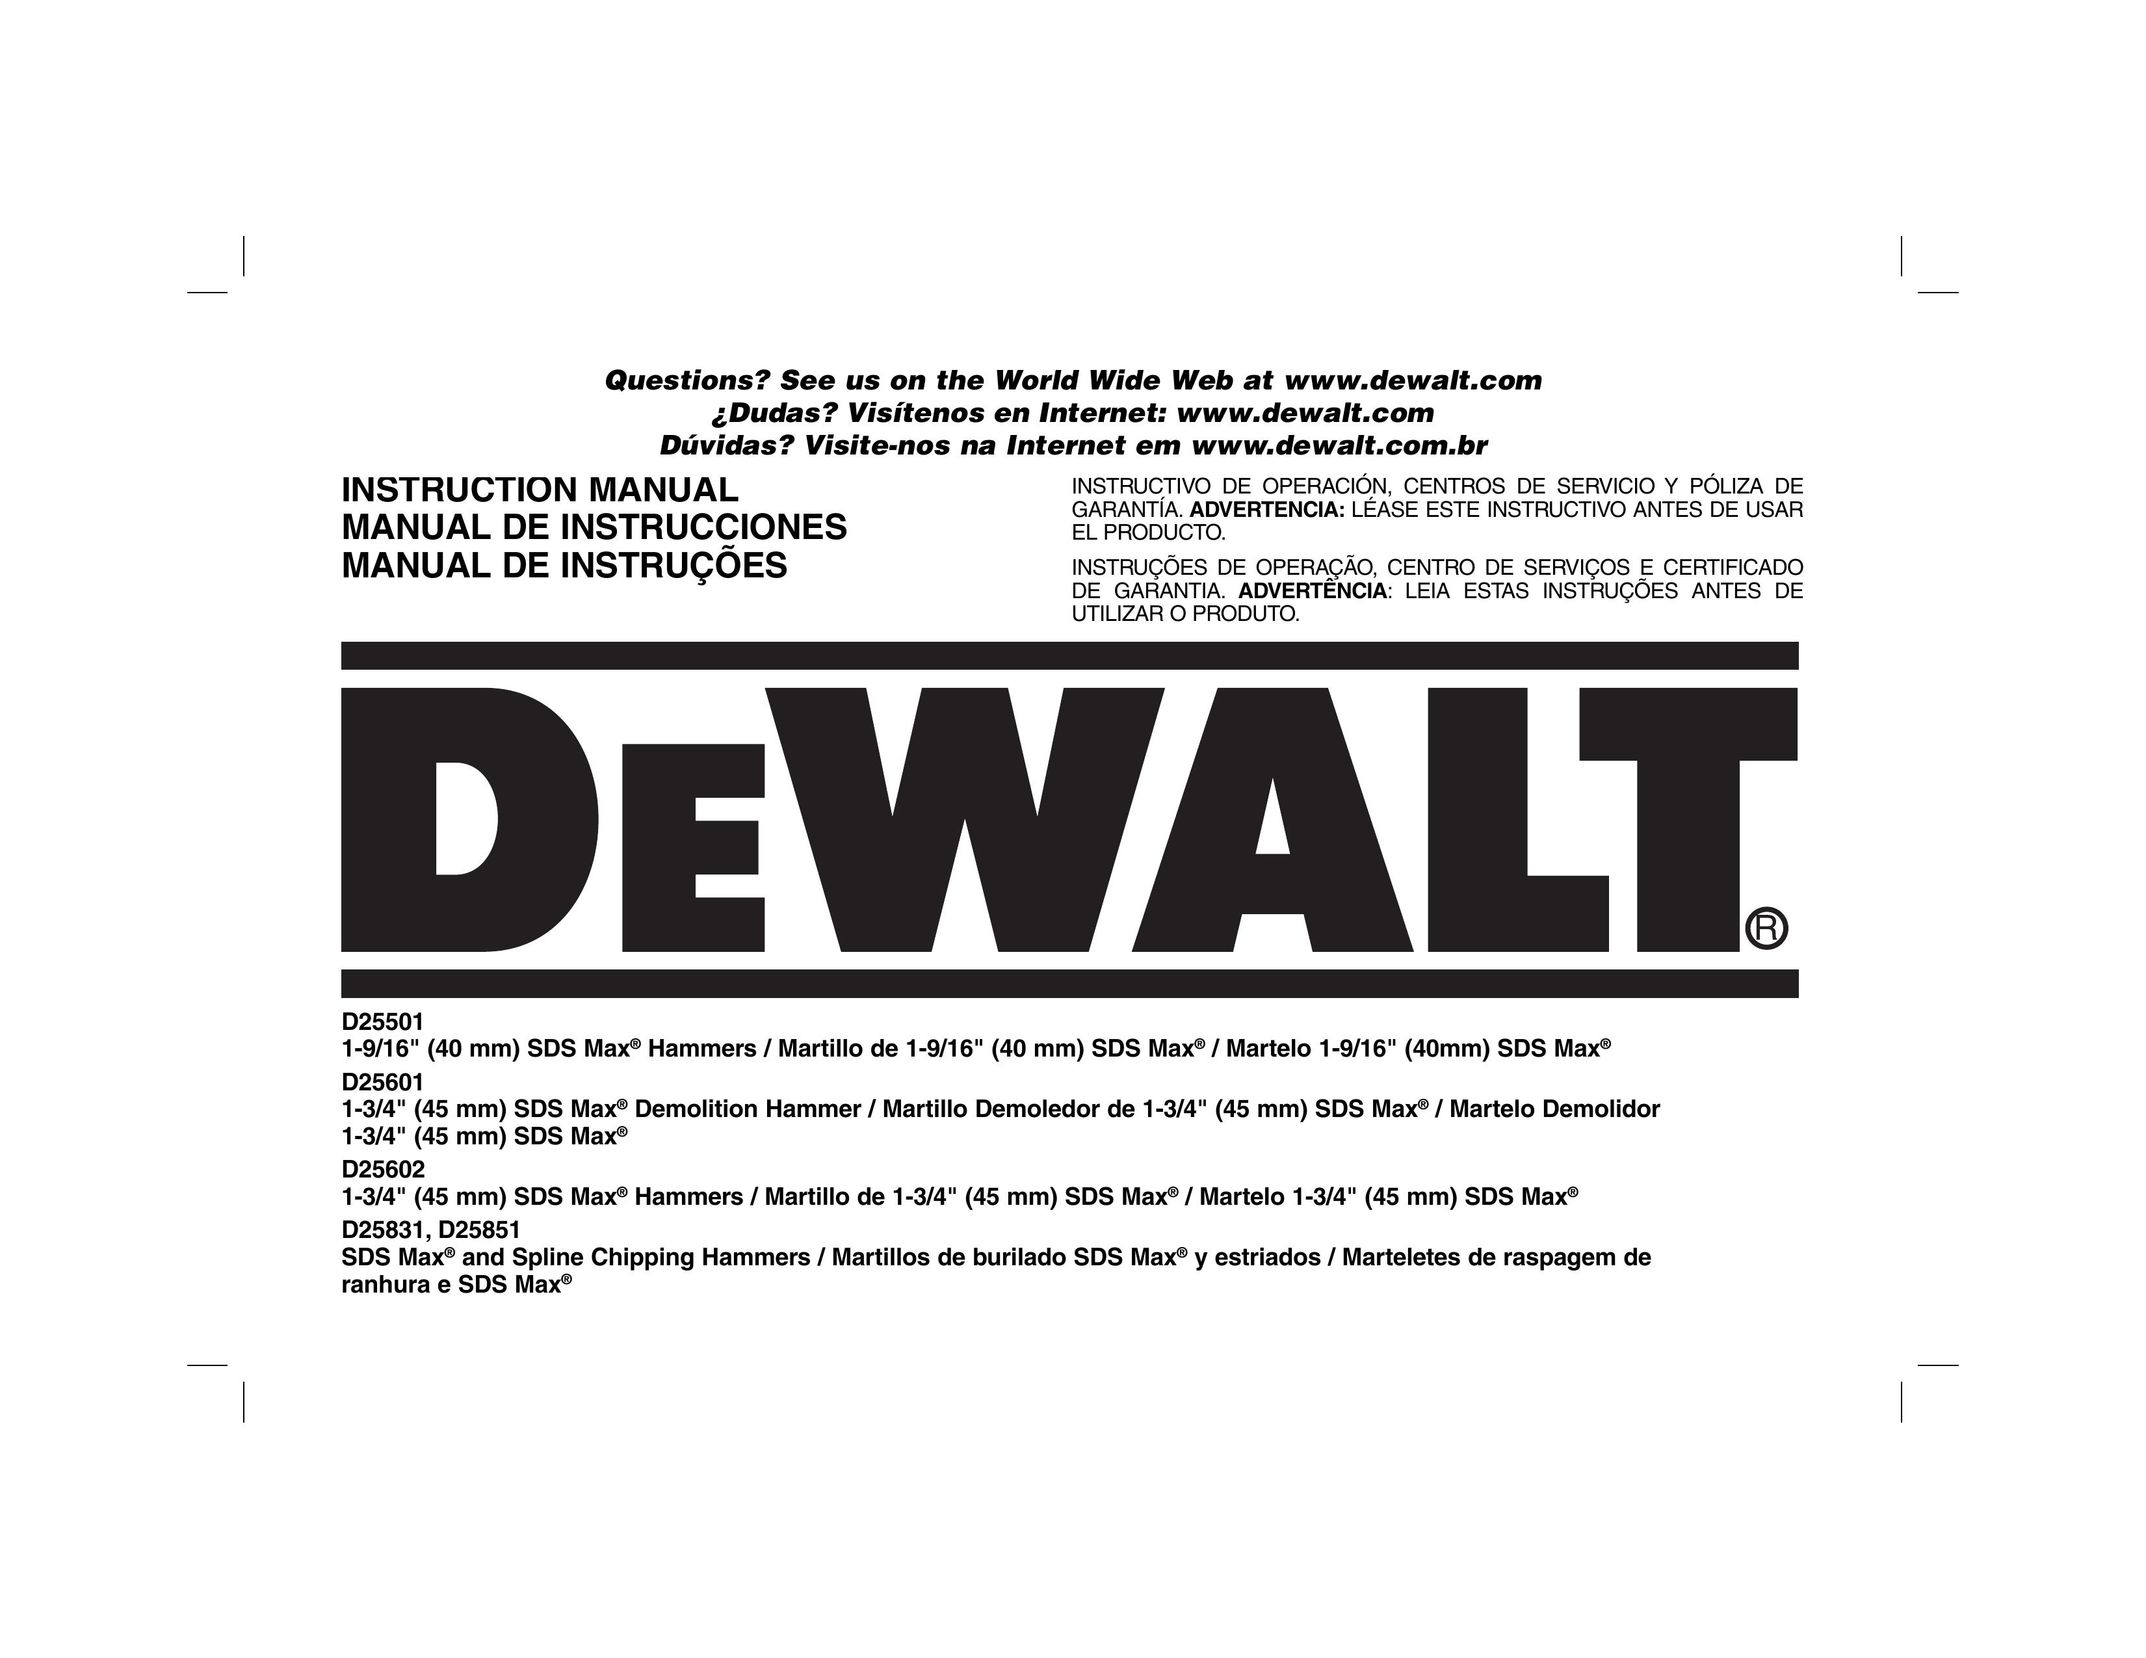 DeWalt D25831 Power Hammer User Manual